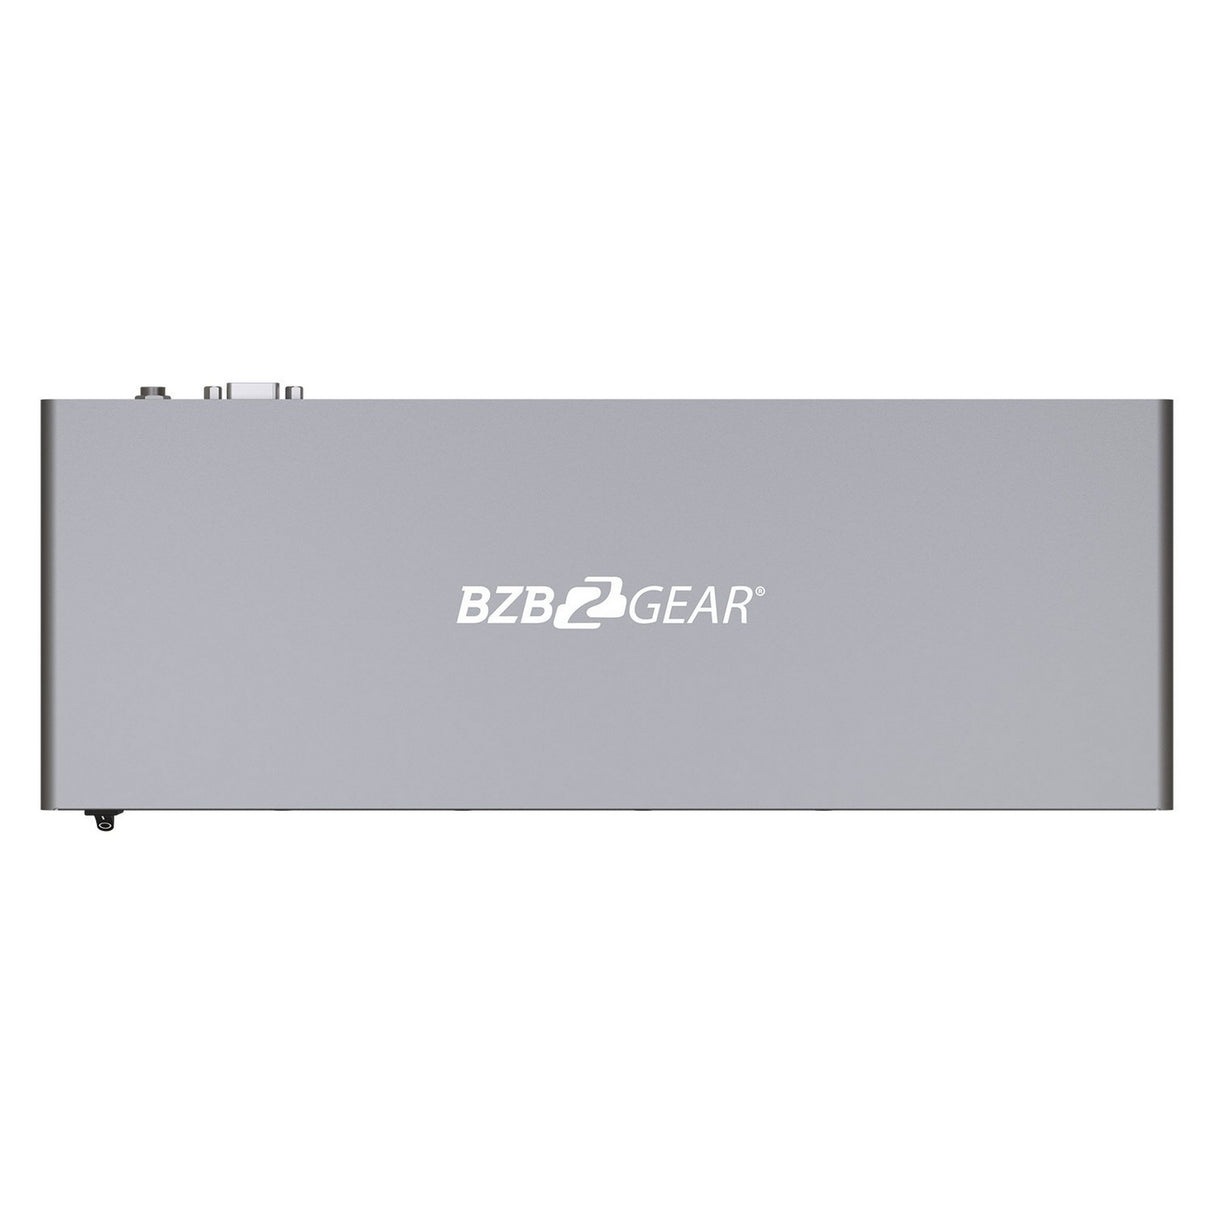 BZBGEAR BG-UHD-44M 4x4 4K UHD HDMI Matrix Switcher with Auto Downscaling and RS-232/IP/Cloud